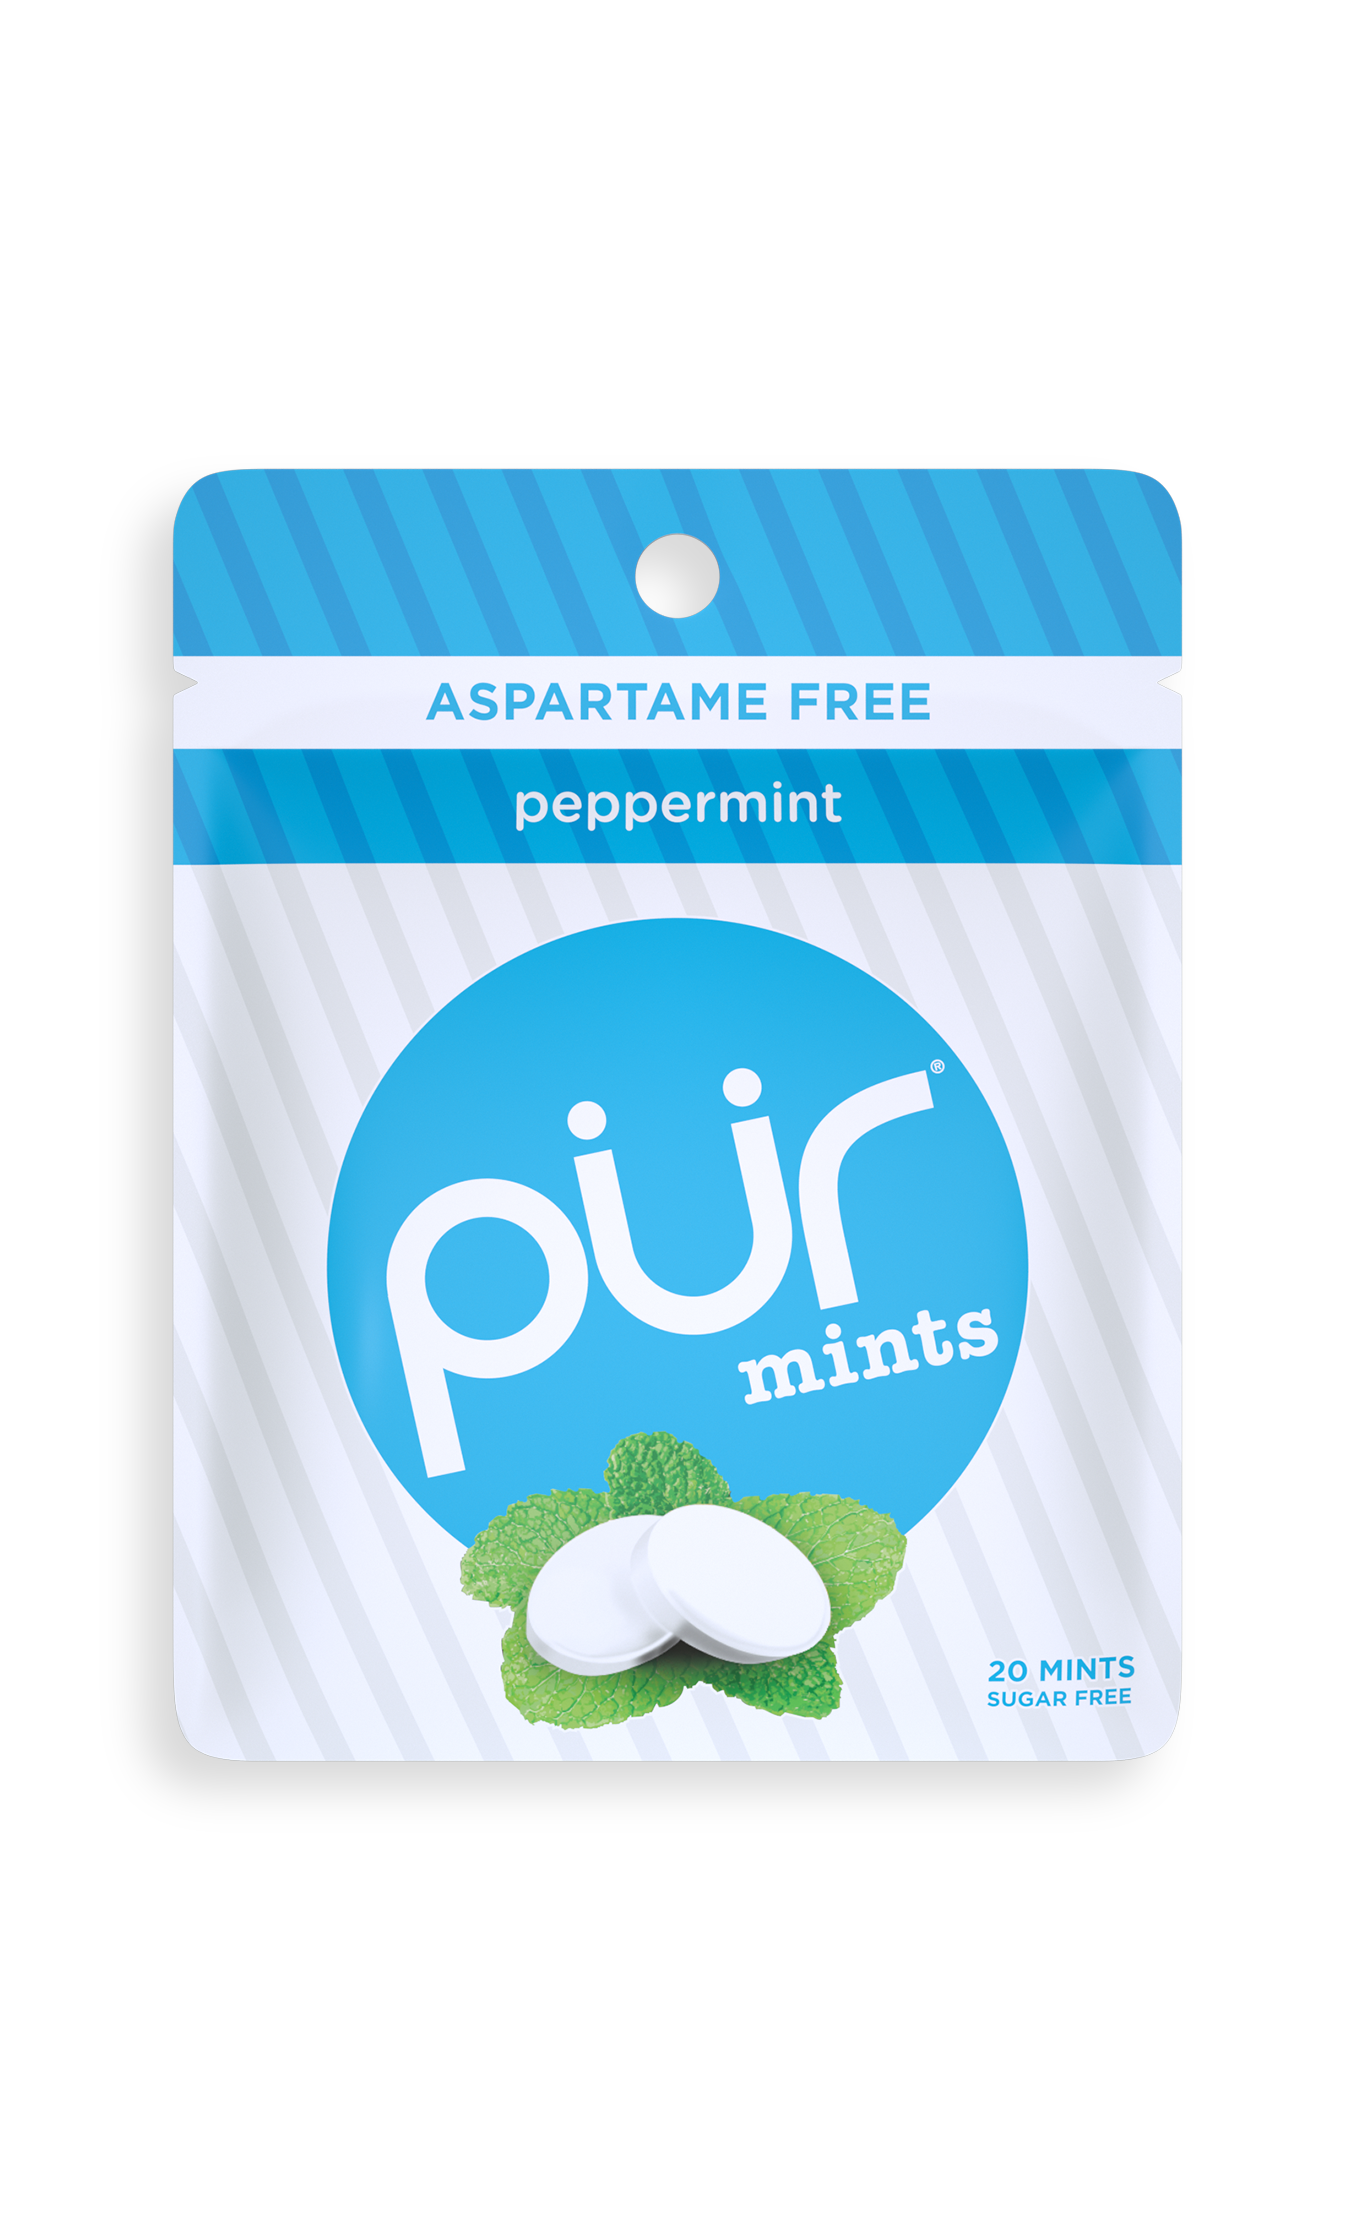 The PUR Company PUR Gum Bubblegum pack (9 count) – Smallflower